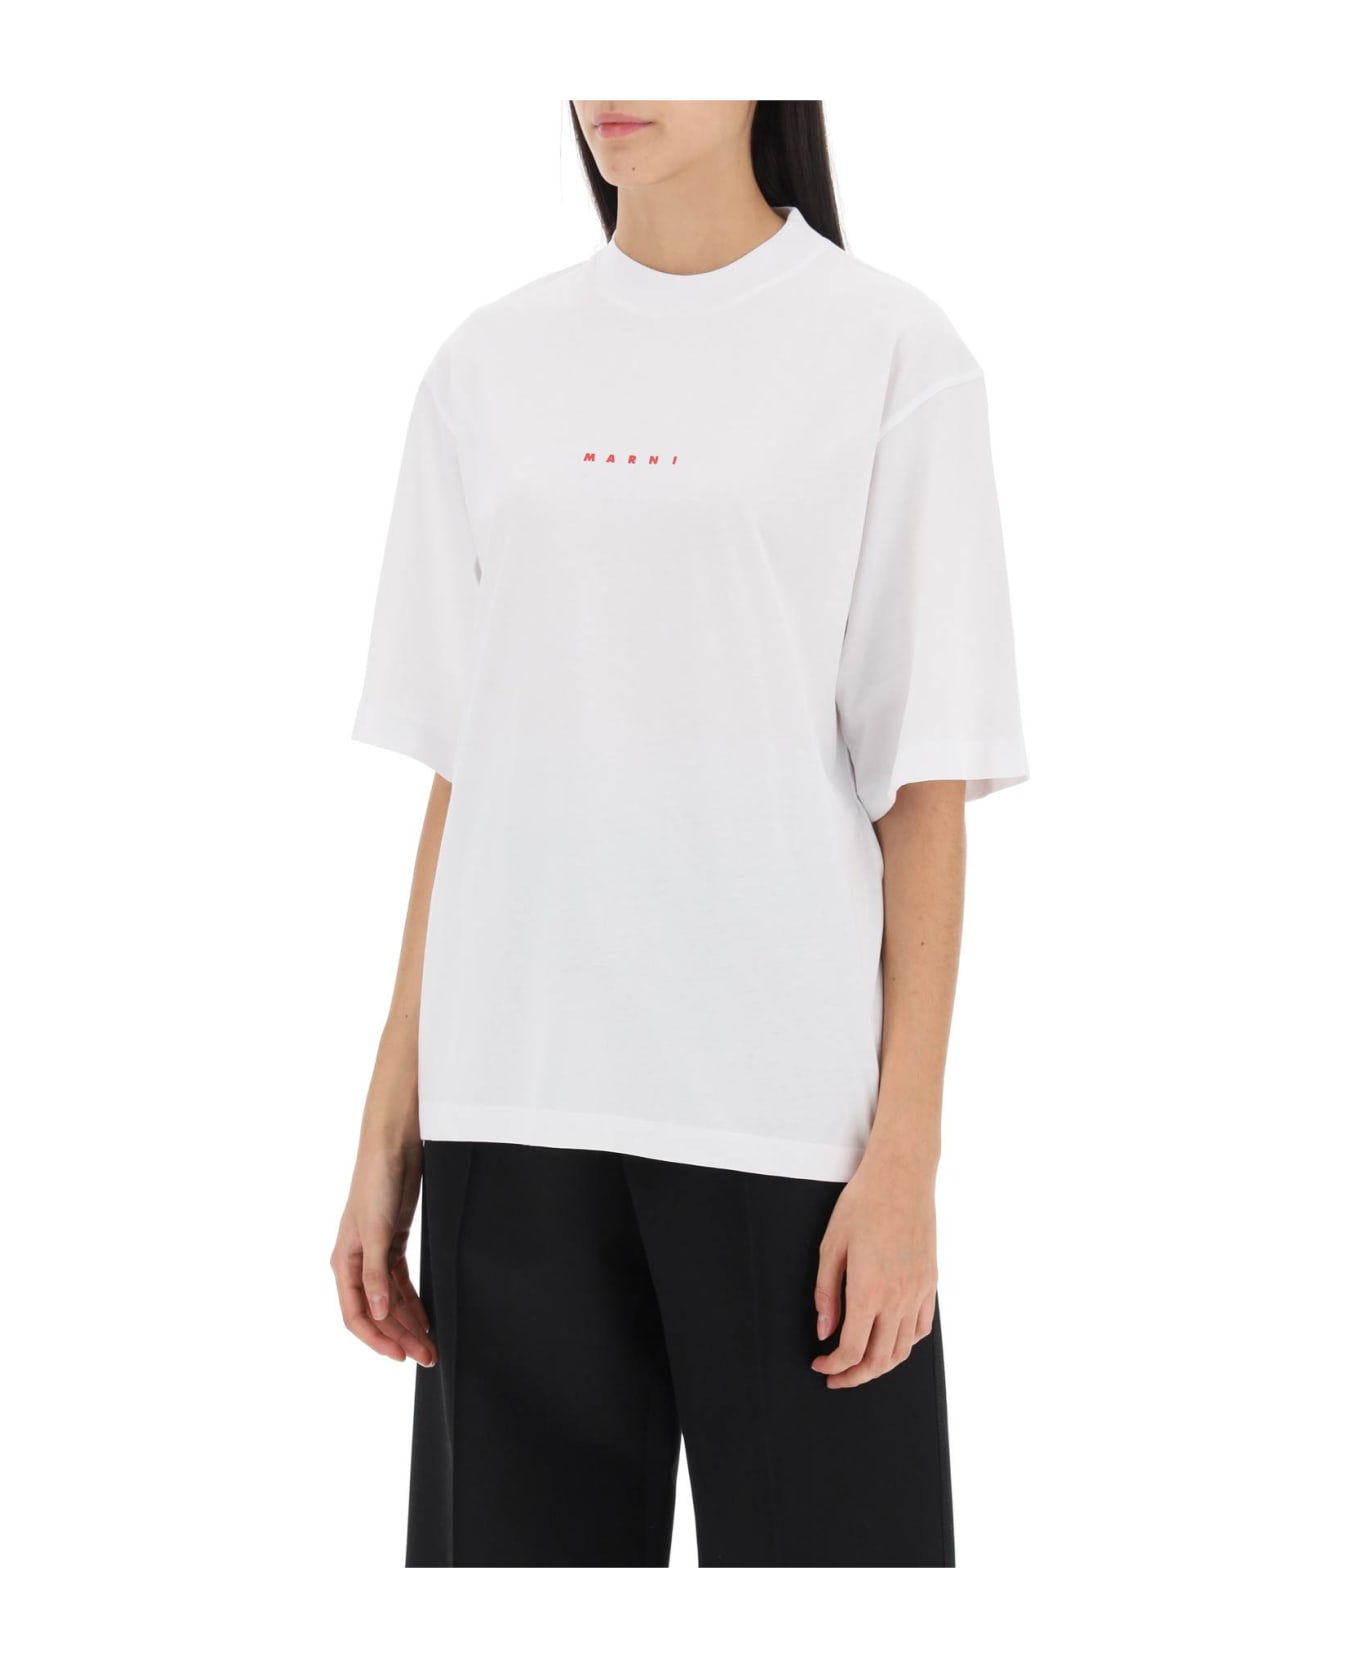 Marni Regular Chest Logo T-shirt - White Tシャツ